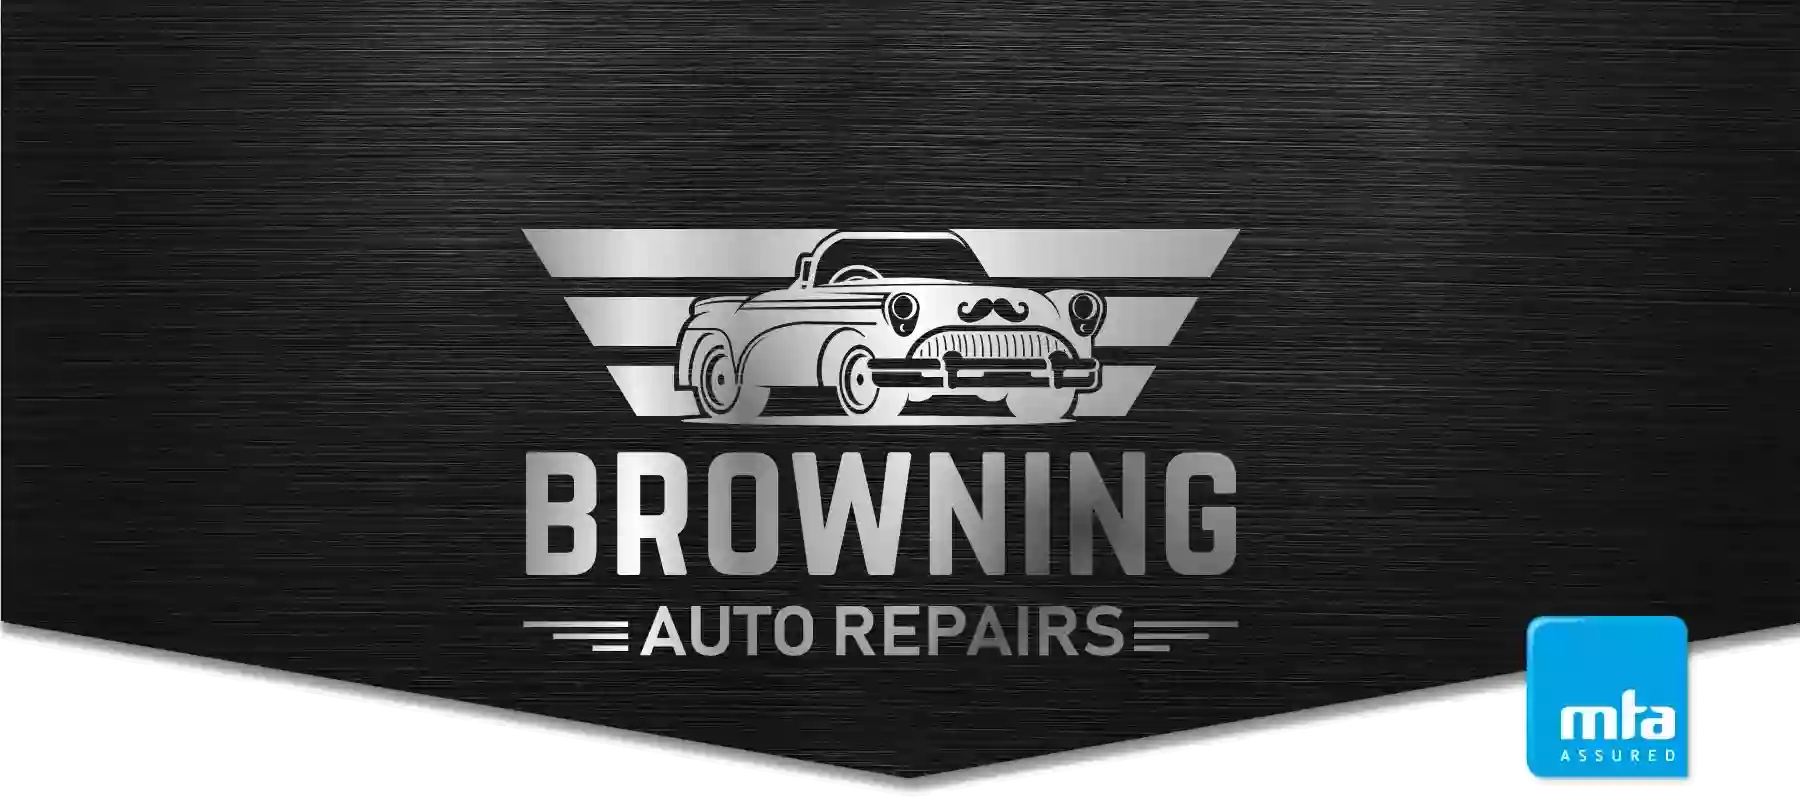 Browning Auto Repairs